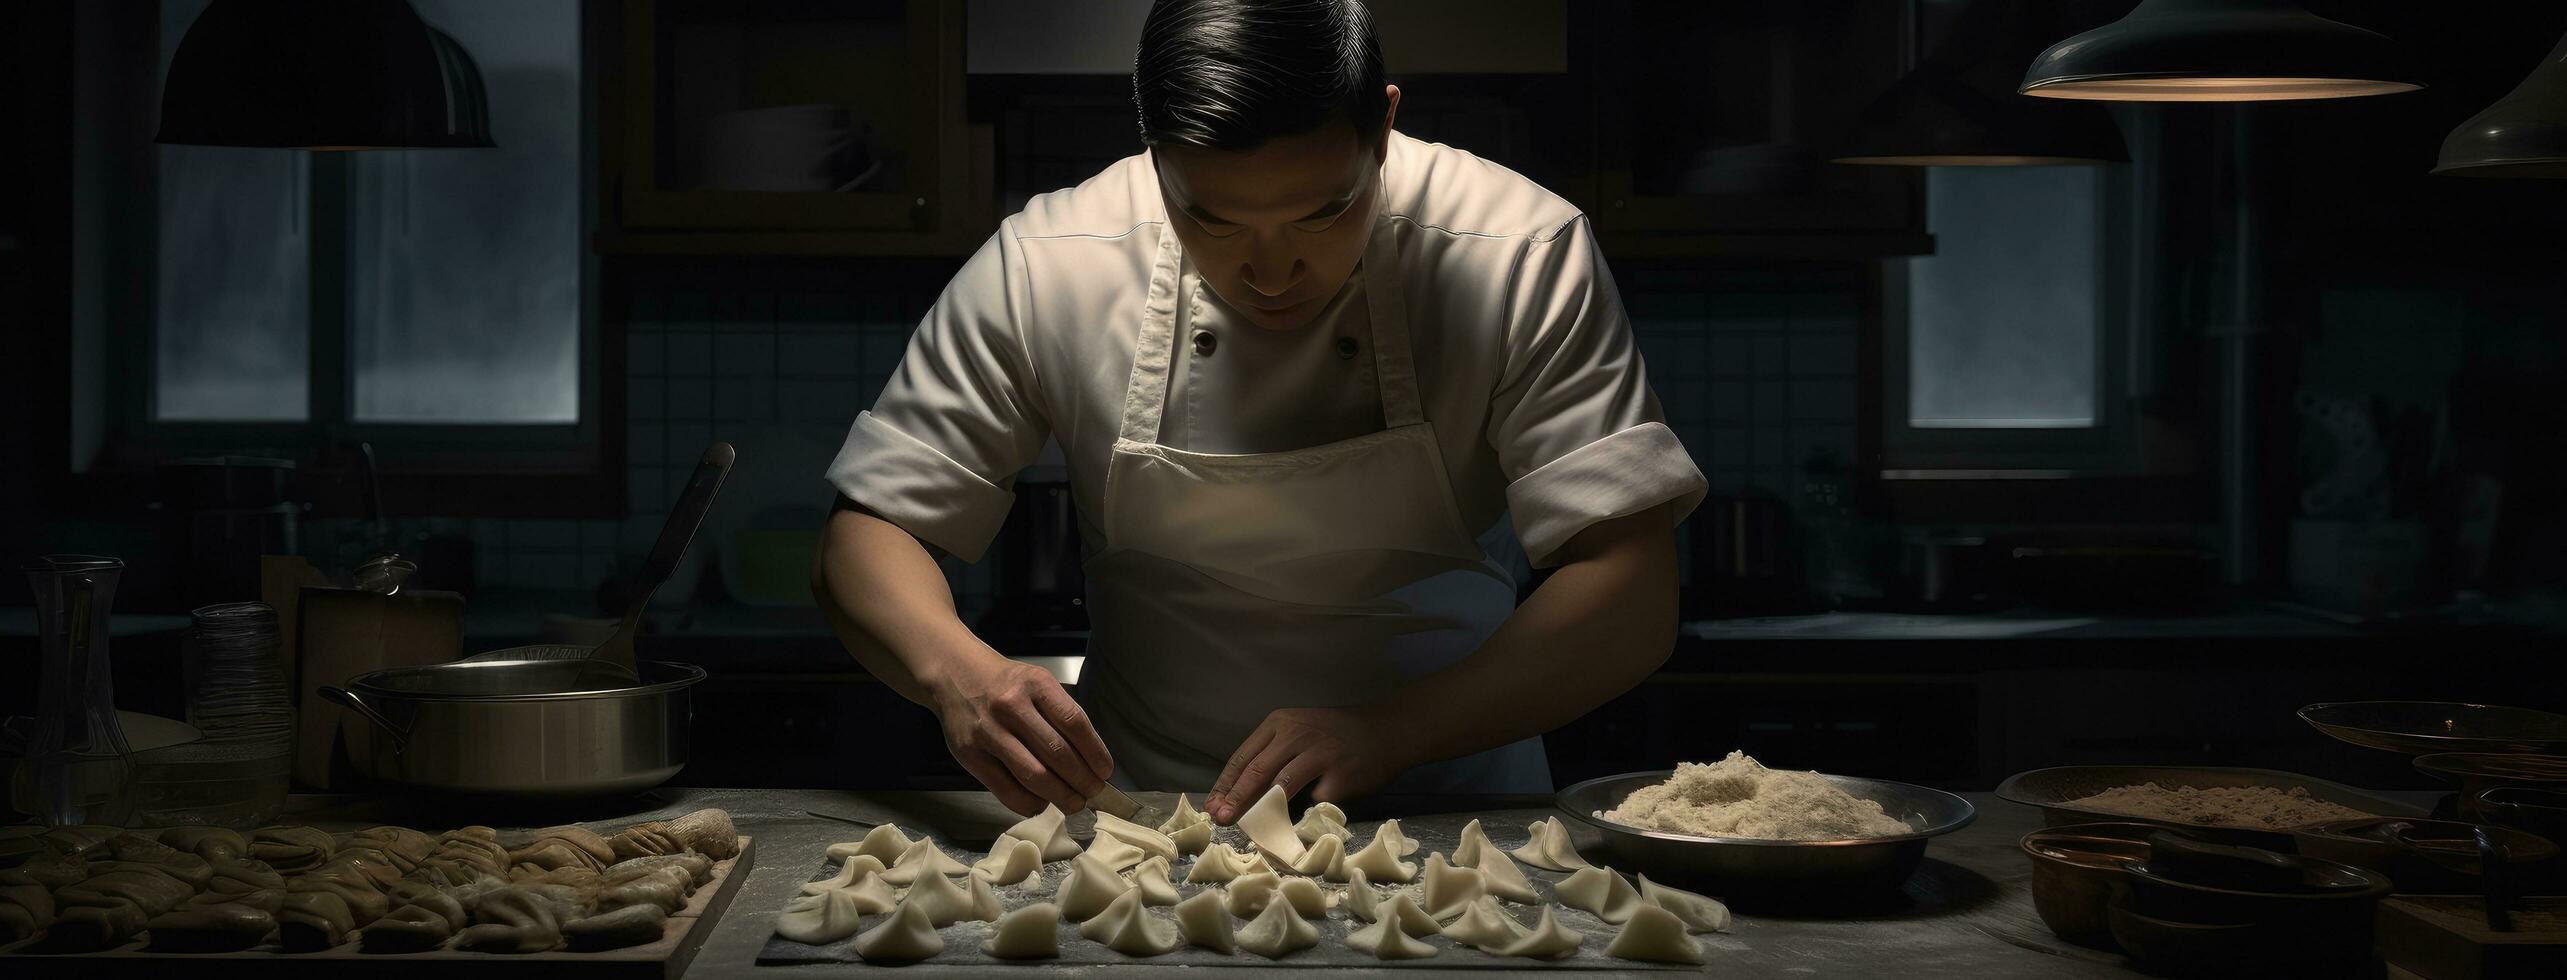 AI generated a kitchen worker is preparing dumplings photo